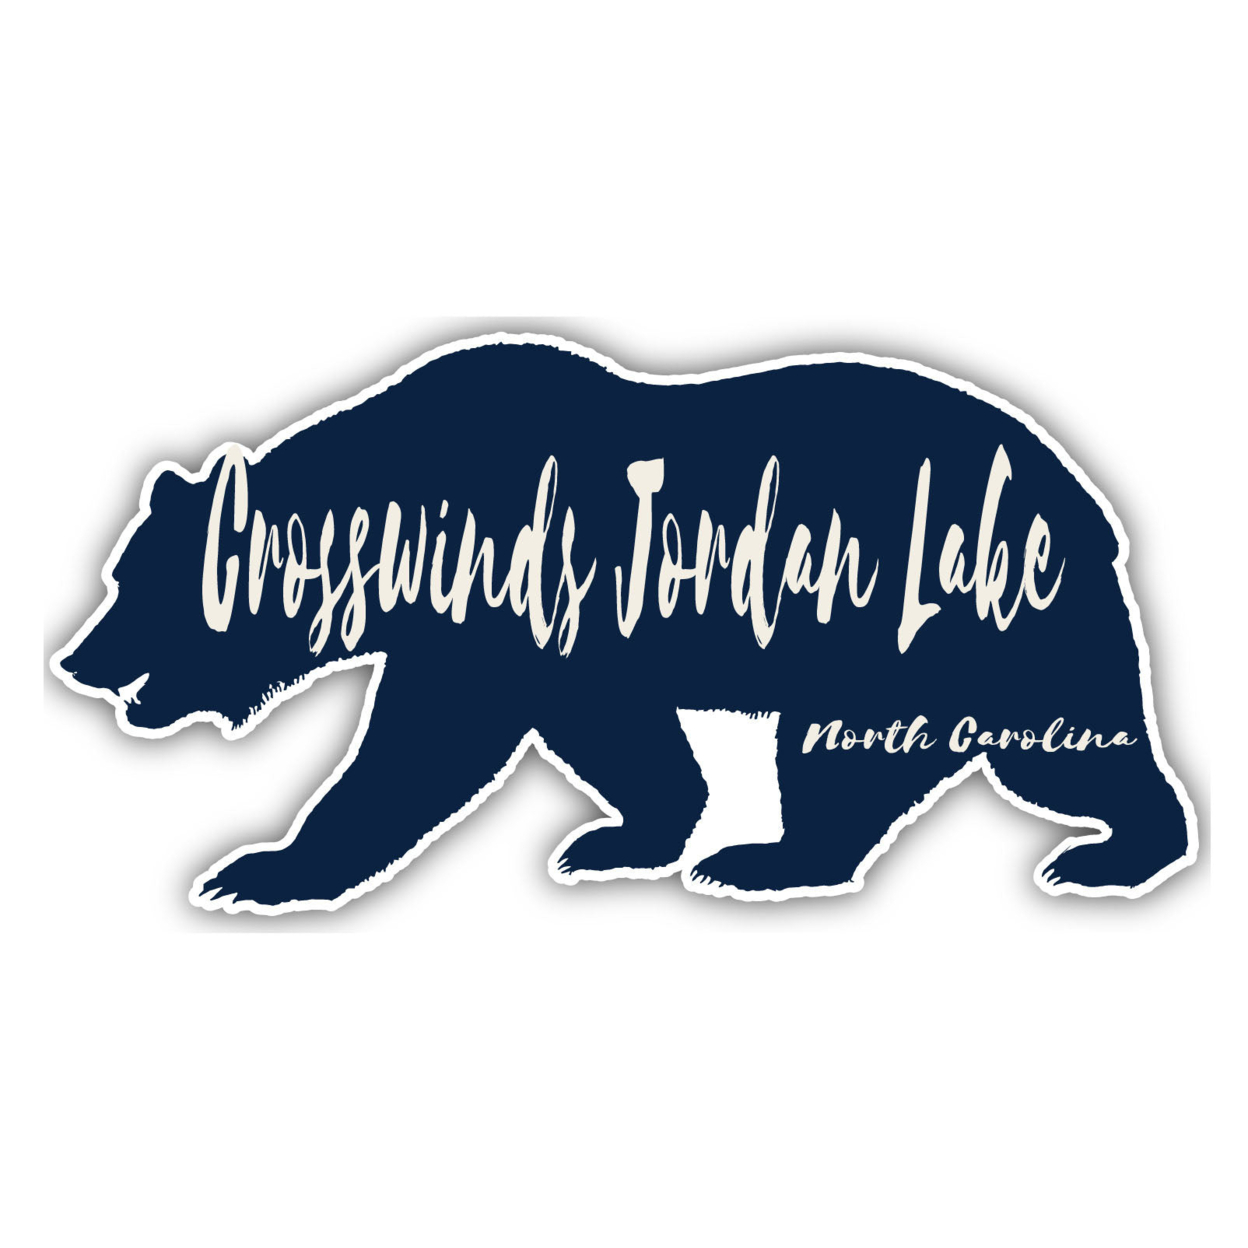 Crosswinds Jordan Lake North Carolina Souvenir Decorative Stickers (Choose Theme And Size) - 4-Pack, 12-Inch, Bear